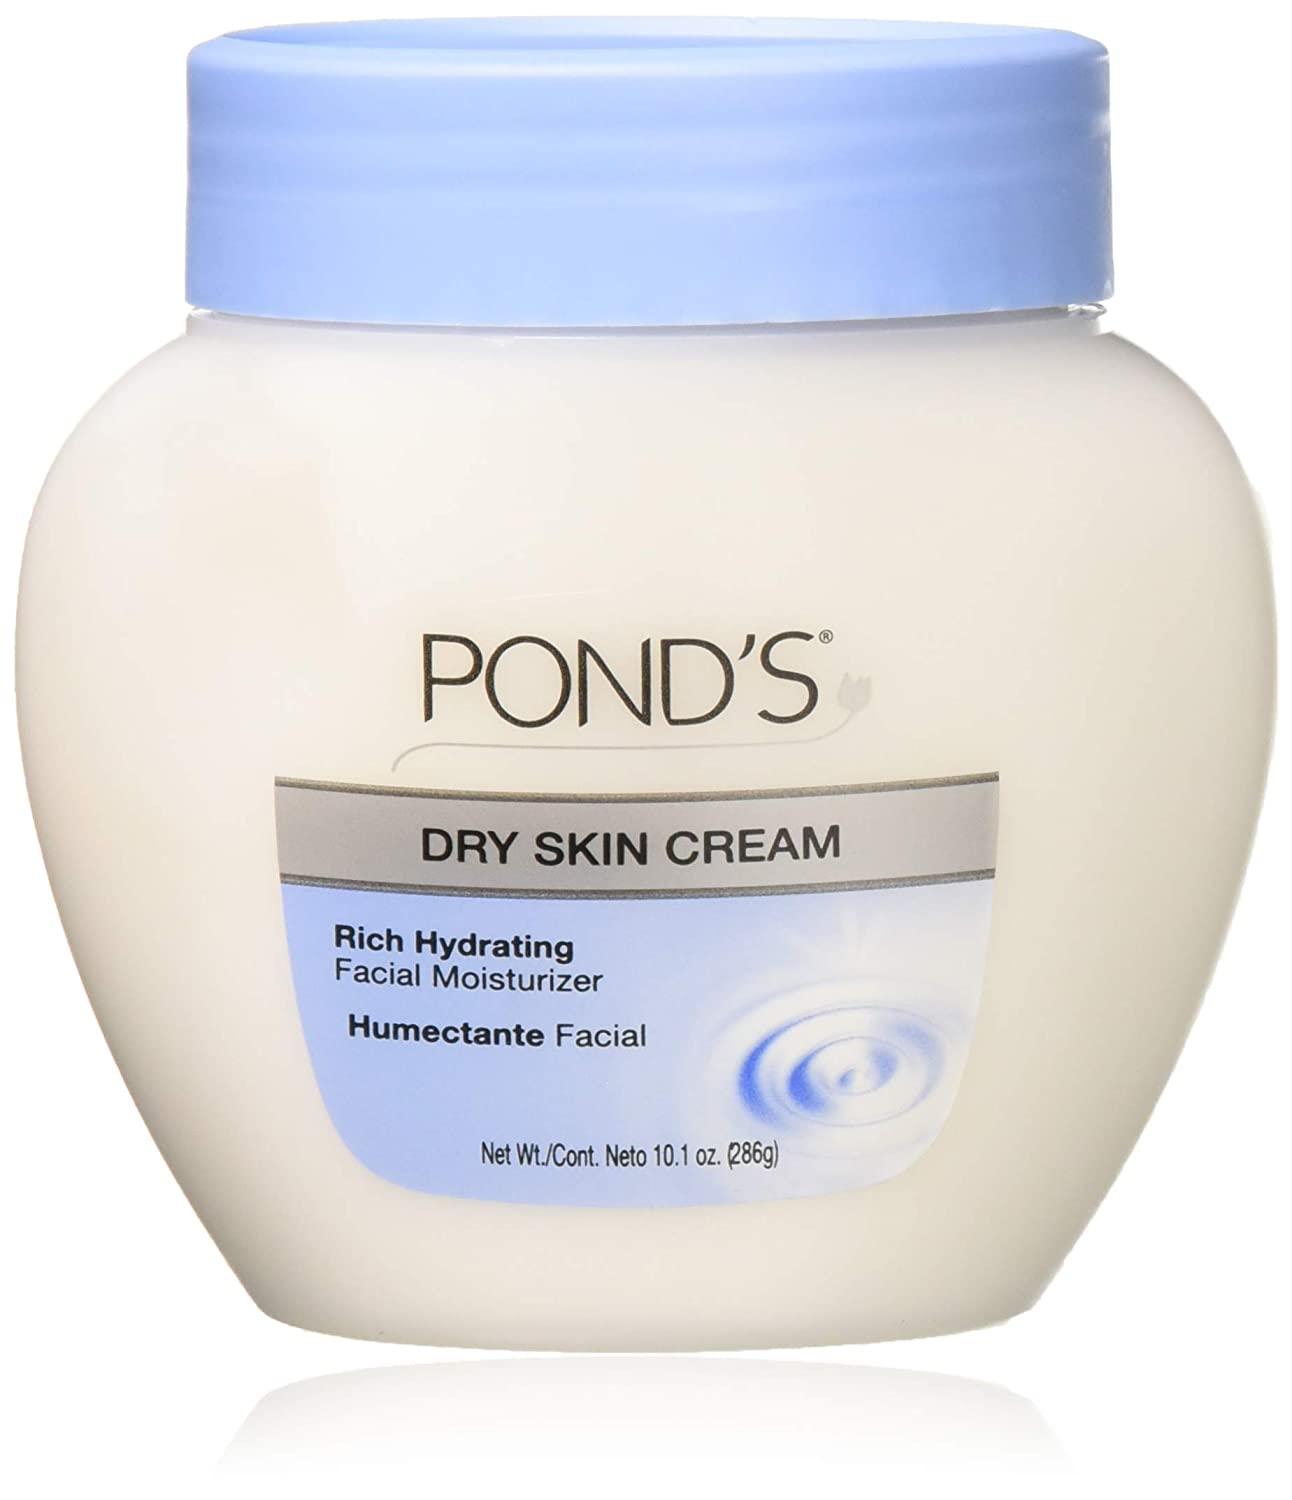 Dry Skin Cream, The Caring Classic